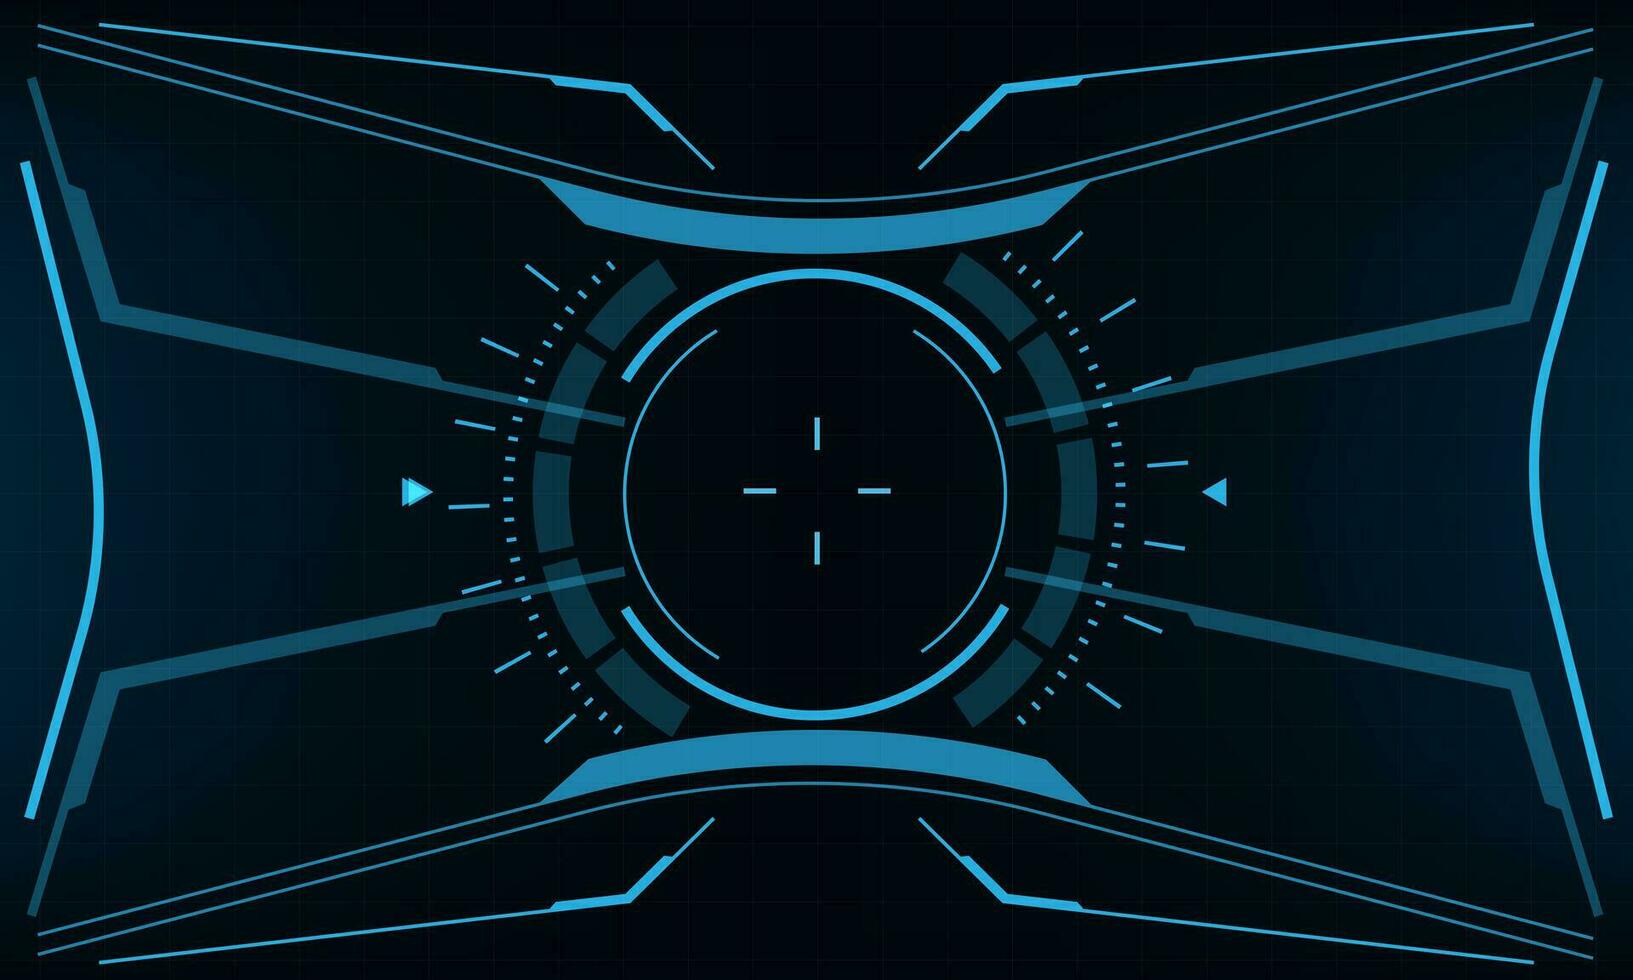 HUD sci-fi interface screen view blue geometric design virtual reality futuristic technology creative display vector